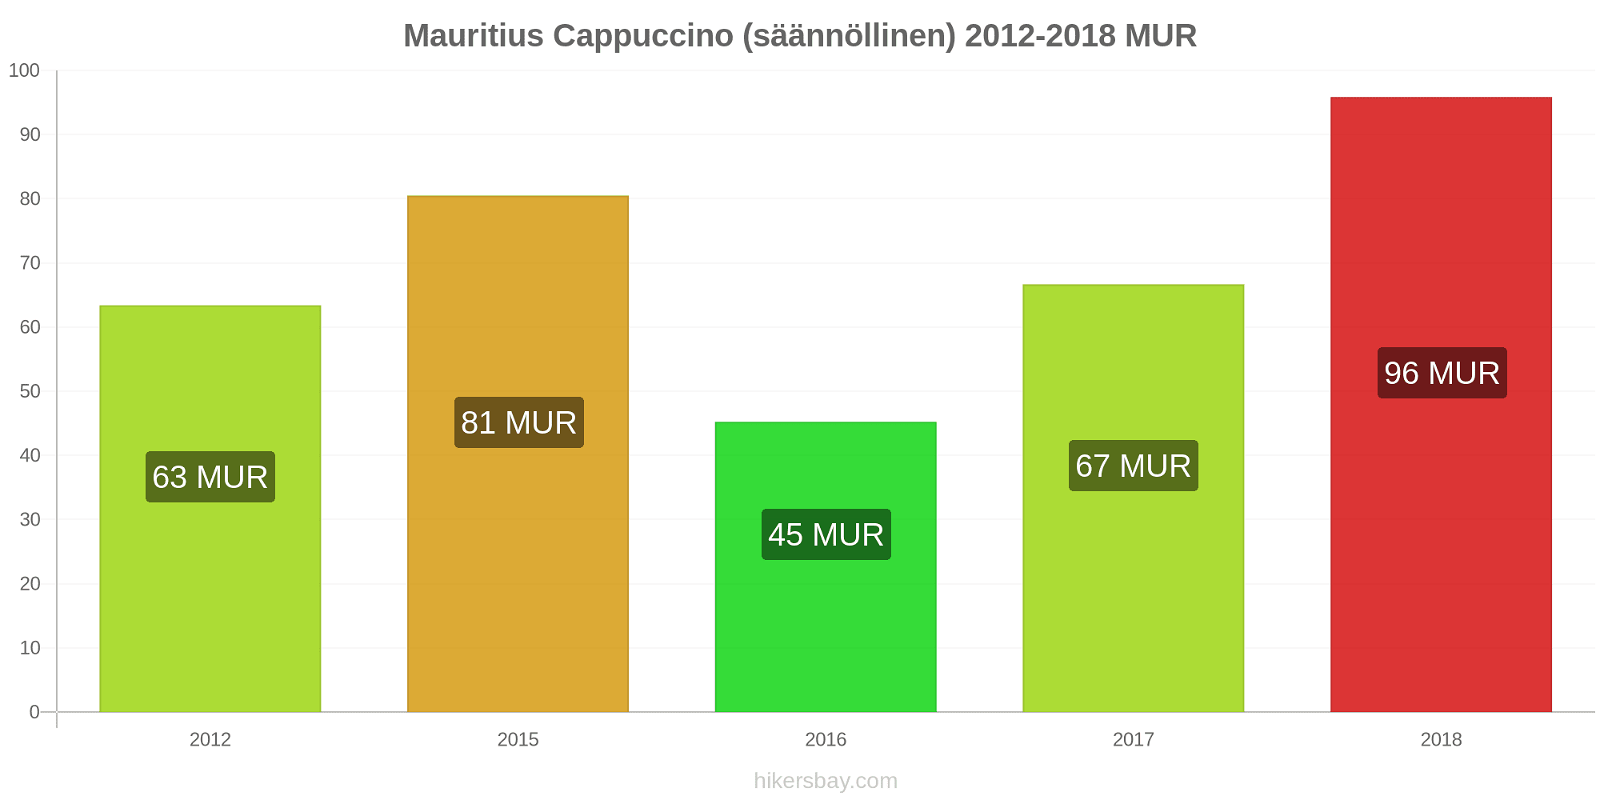 Mauritius hintojen muutokset Cappuccino (säännöllinen) hikersbay.com